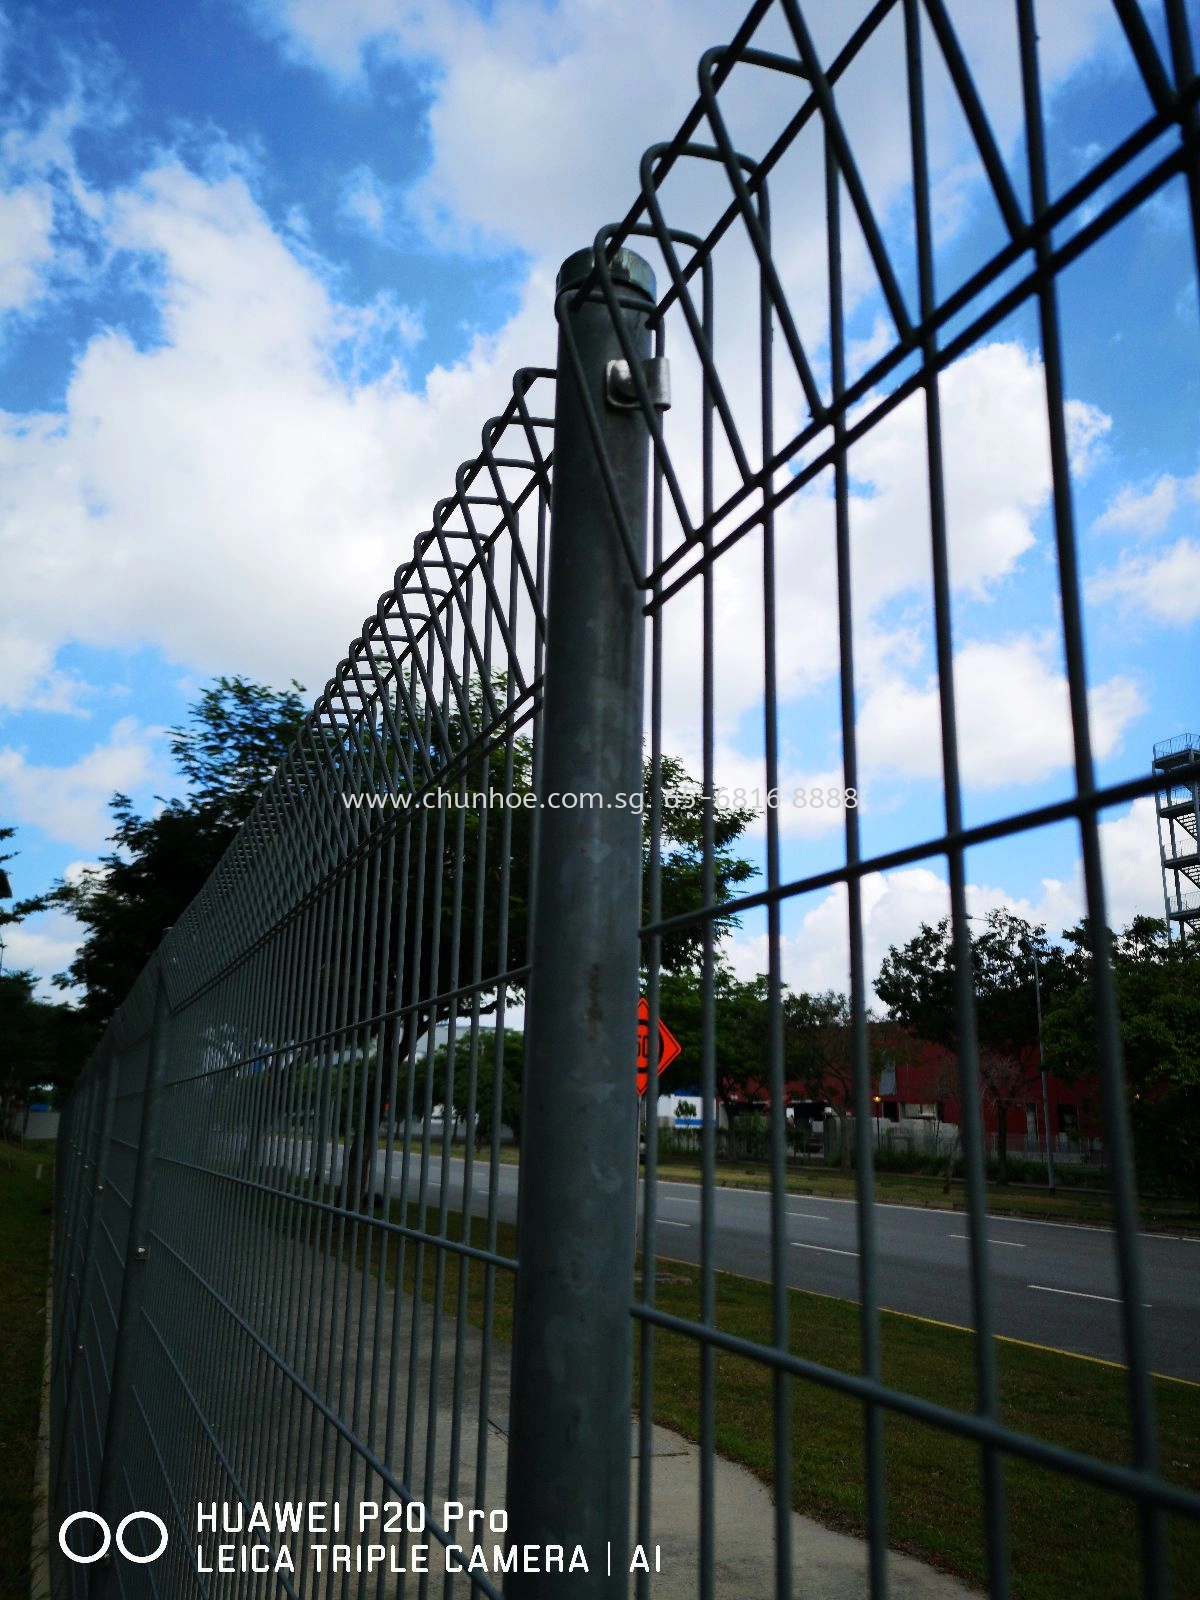 Singapore Tuas south shine brc fence project